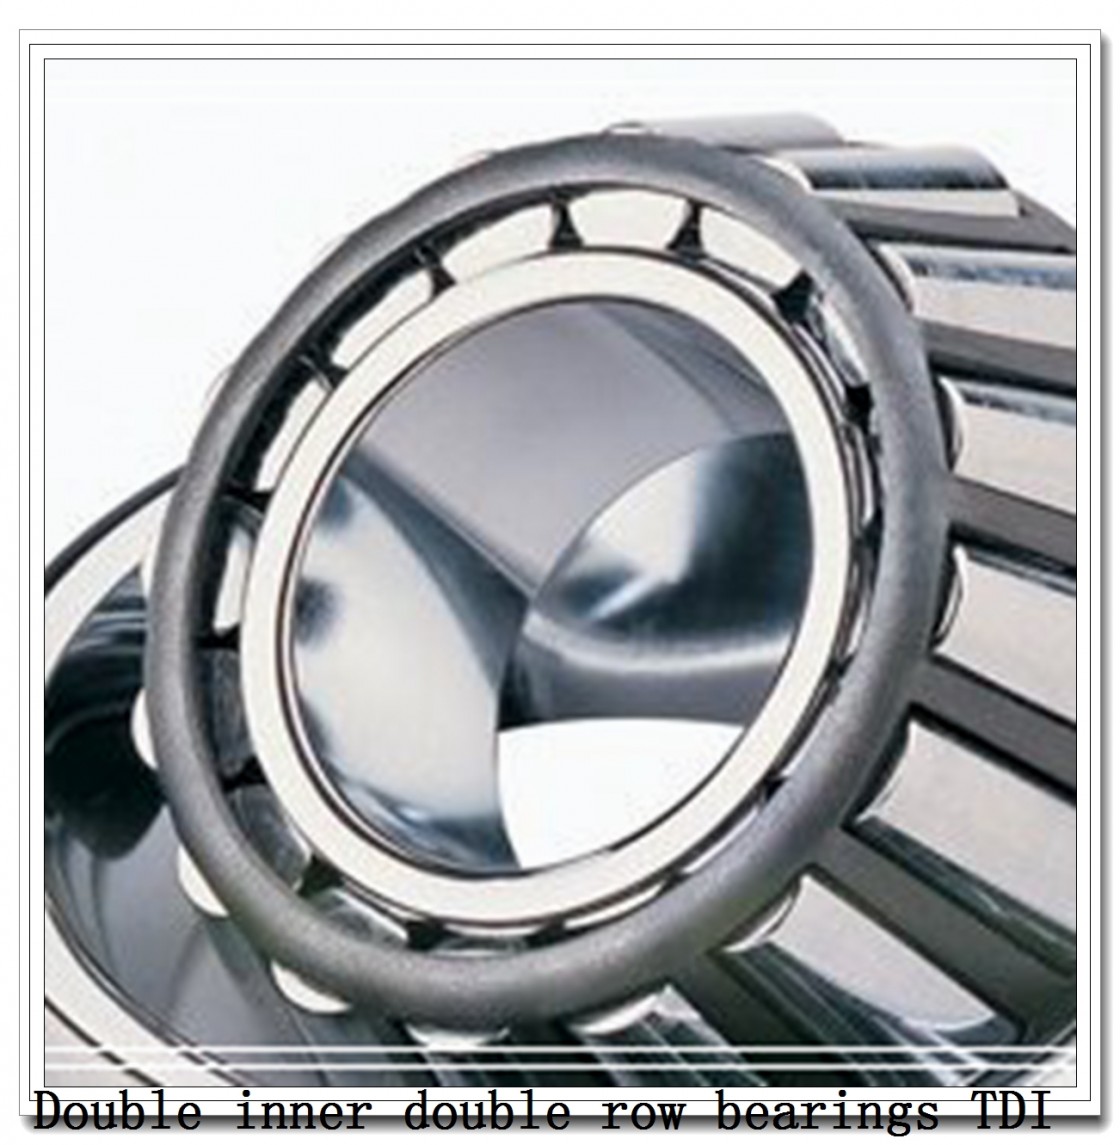 160TDO262-1 Double inner double row bearings TDI